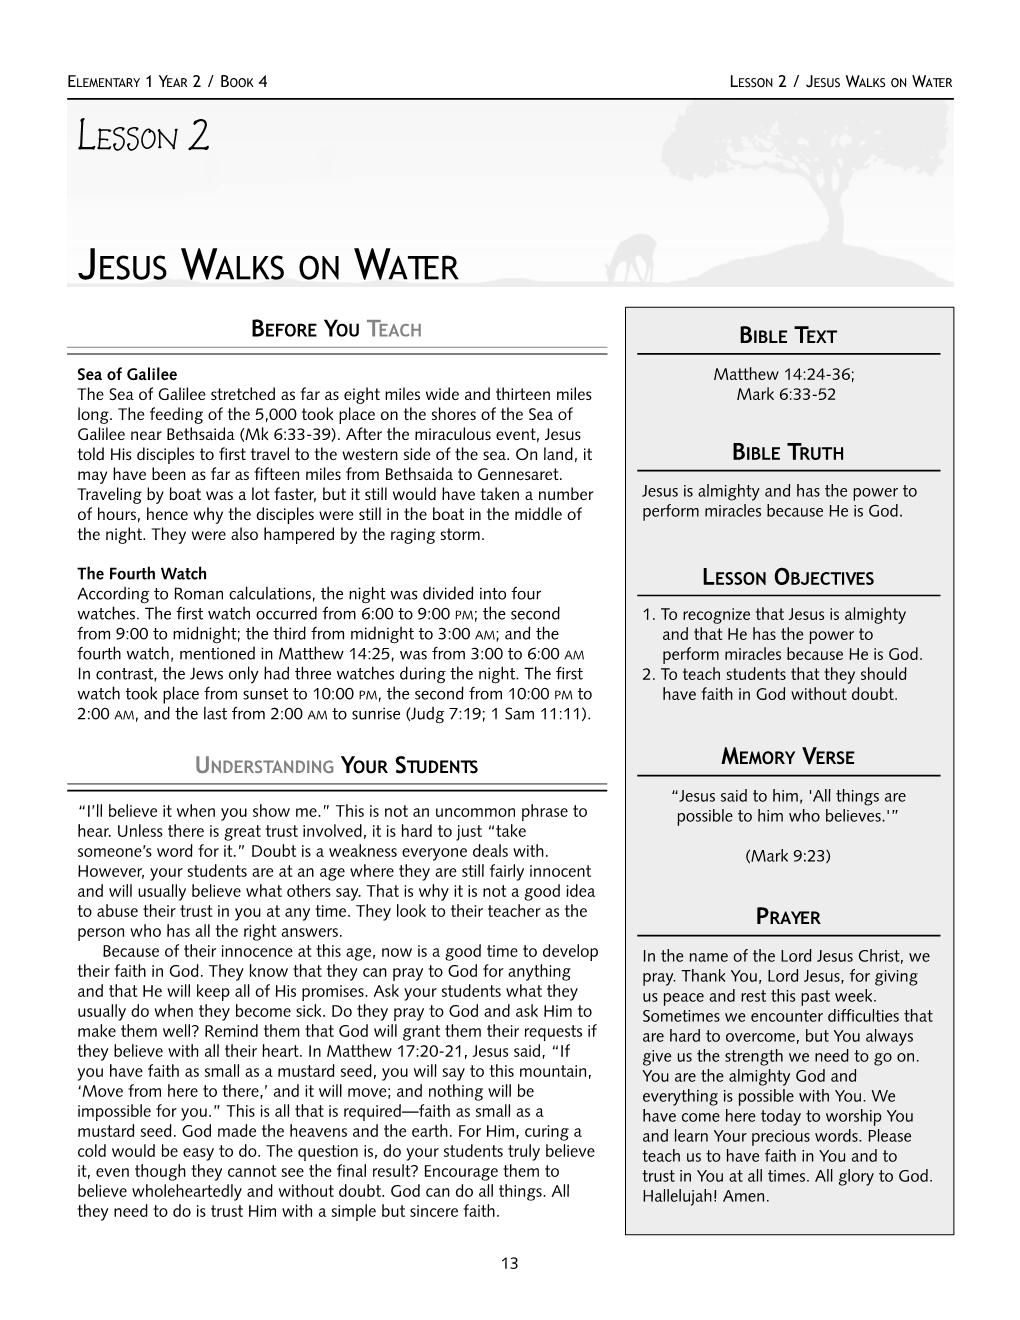 Jesus Walks on Water Lesson 2